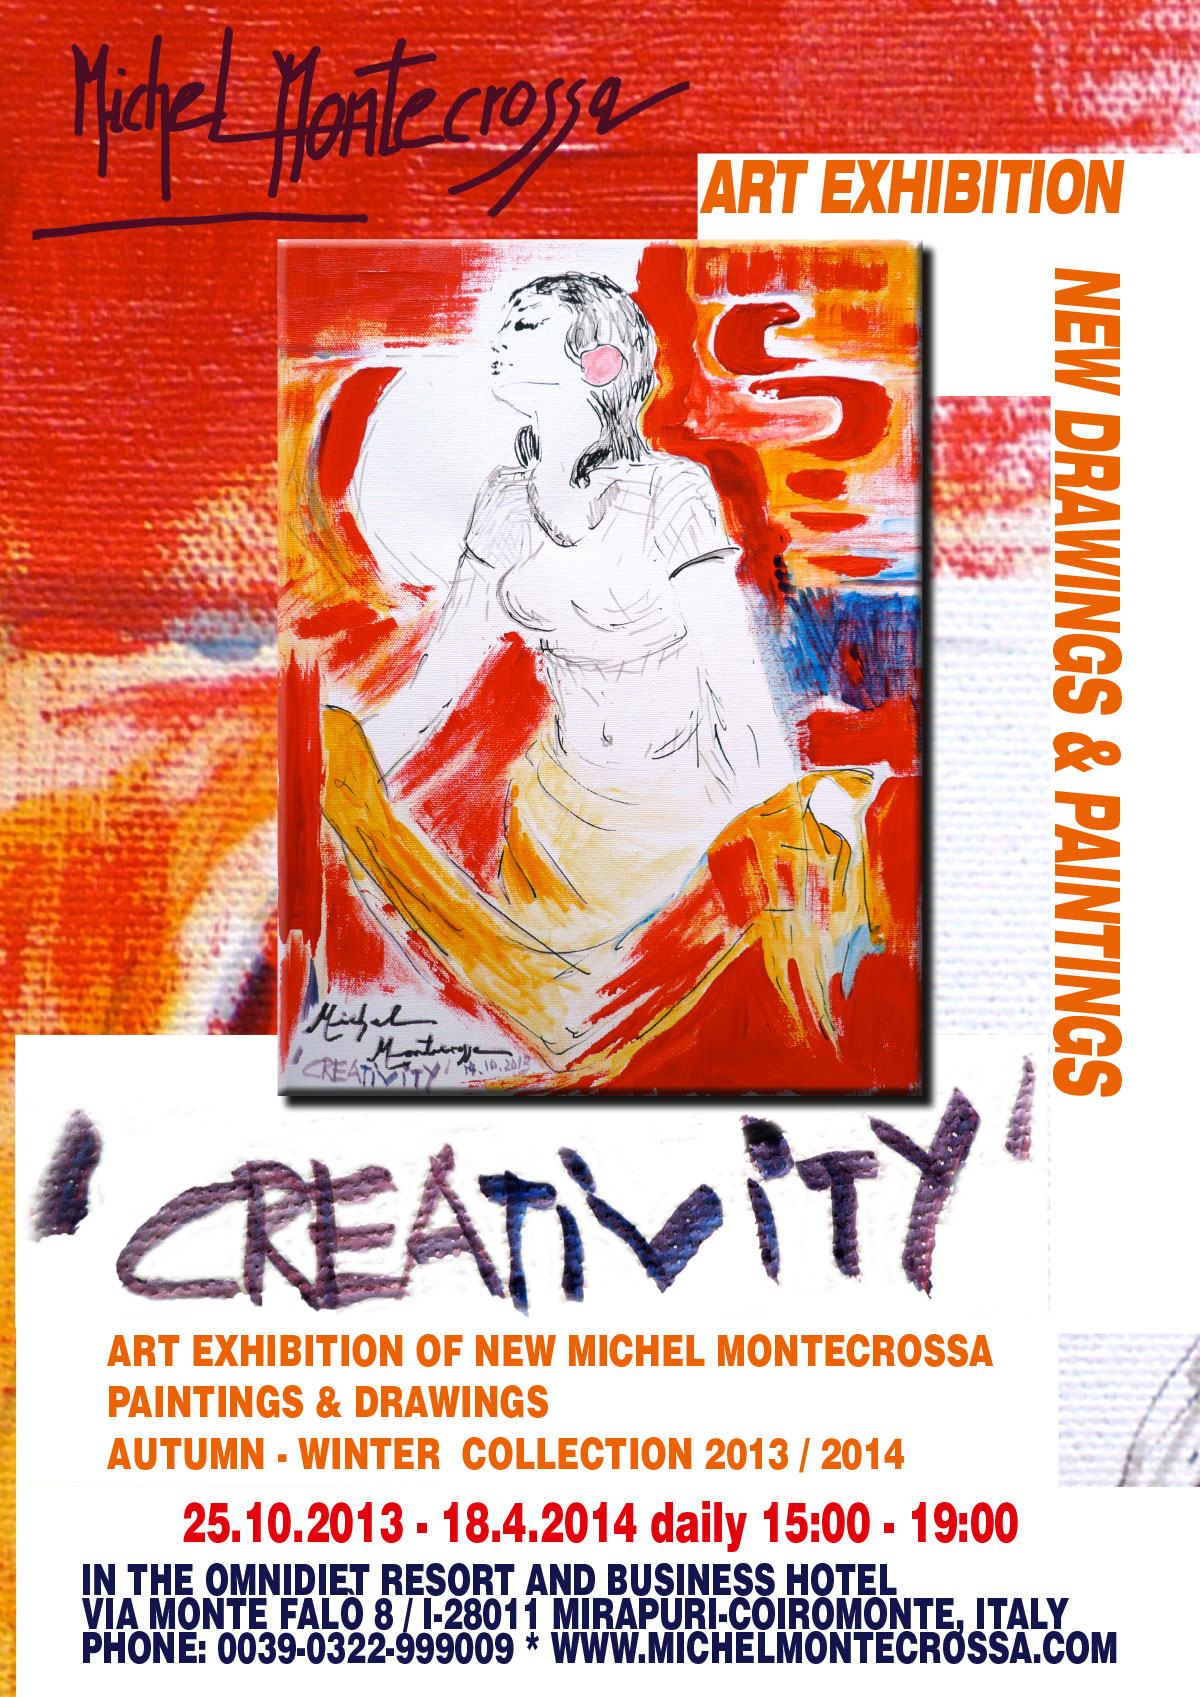 Creativity Art Exhibition